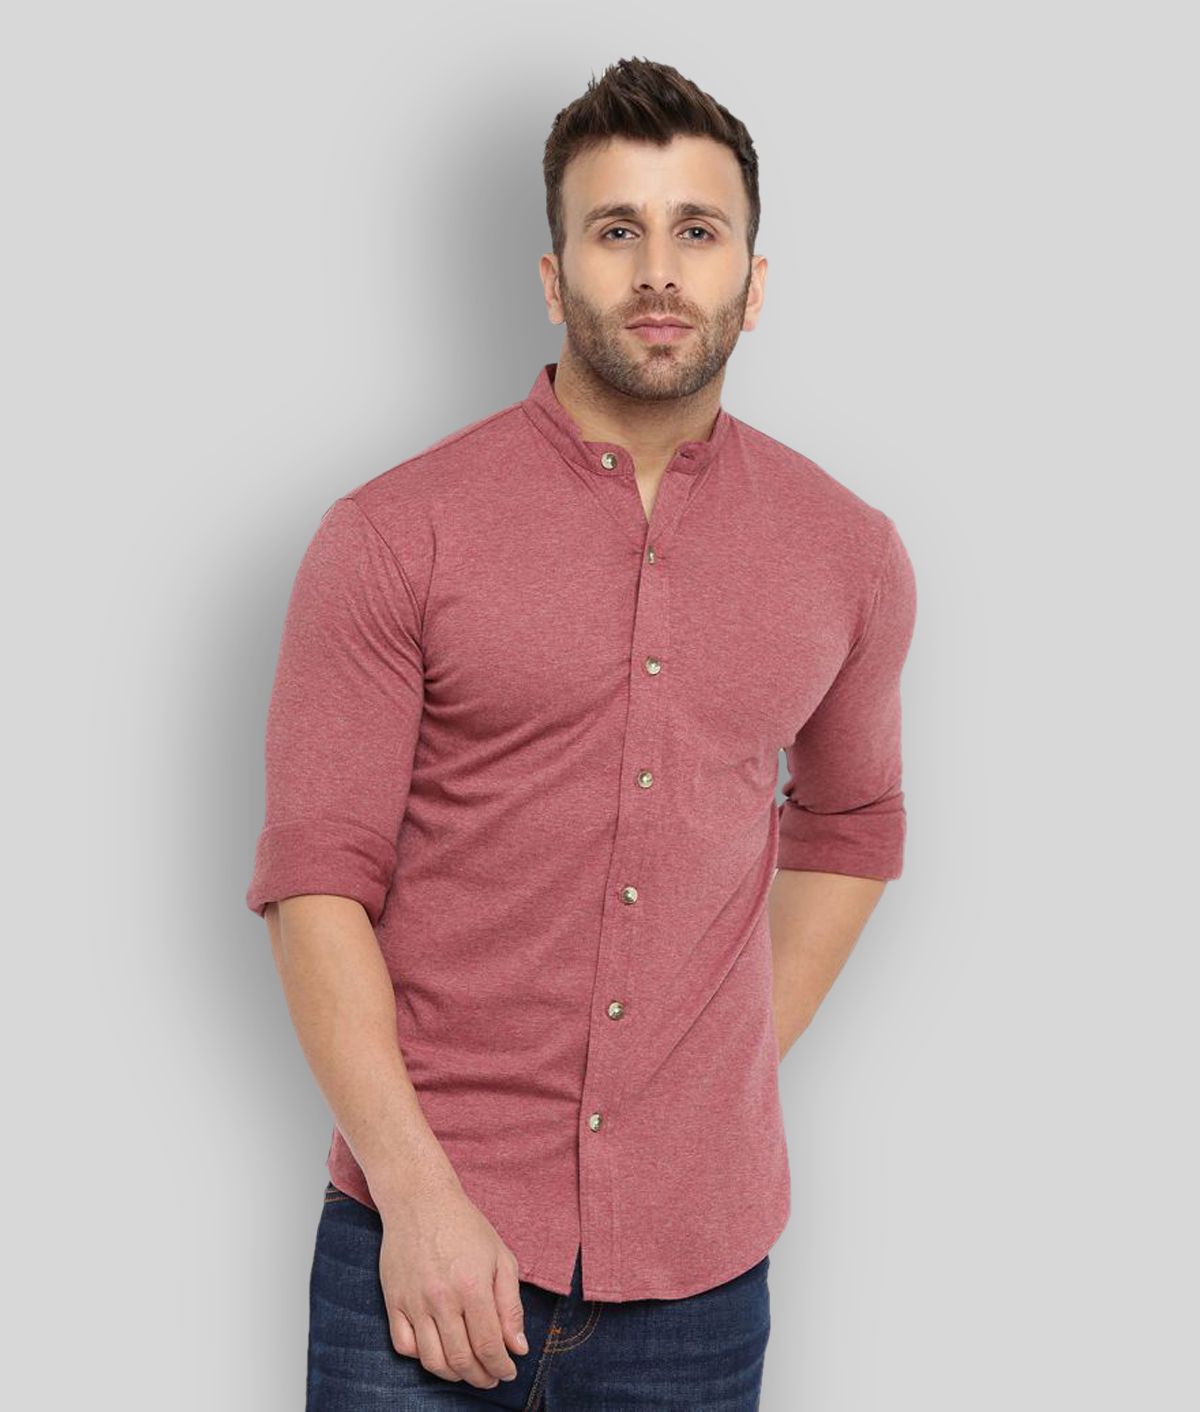     			Gritsones - Pink Cotton Blend Regular Fit Men's Casual Shirt (Pack of 1)